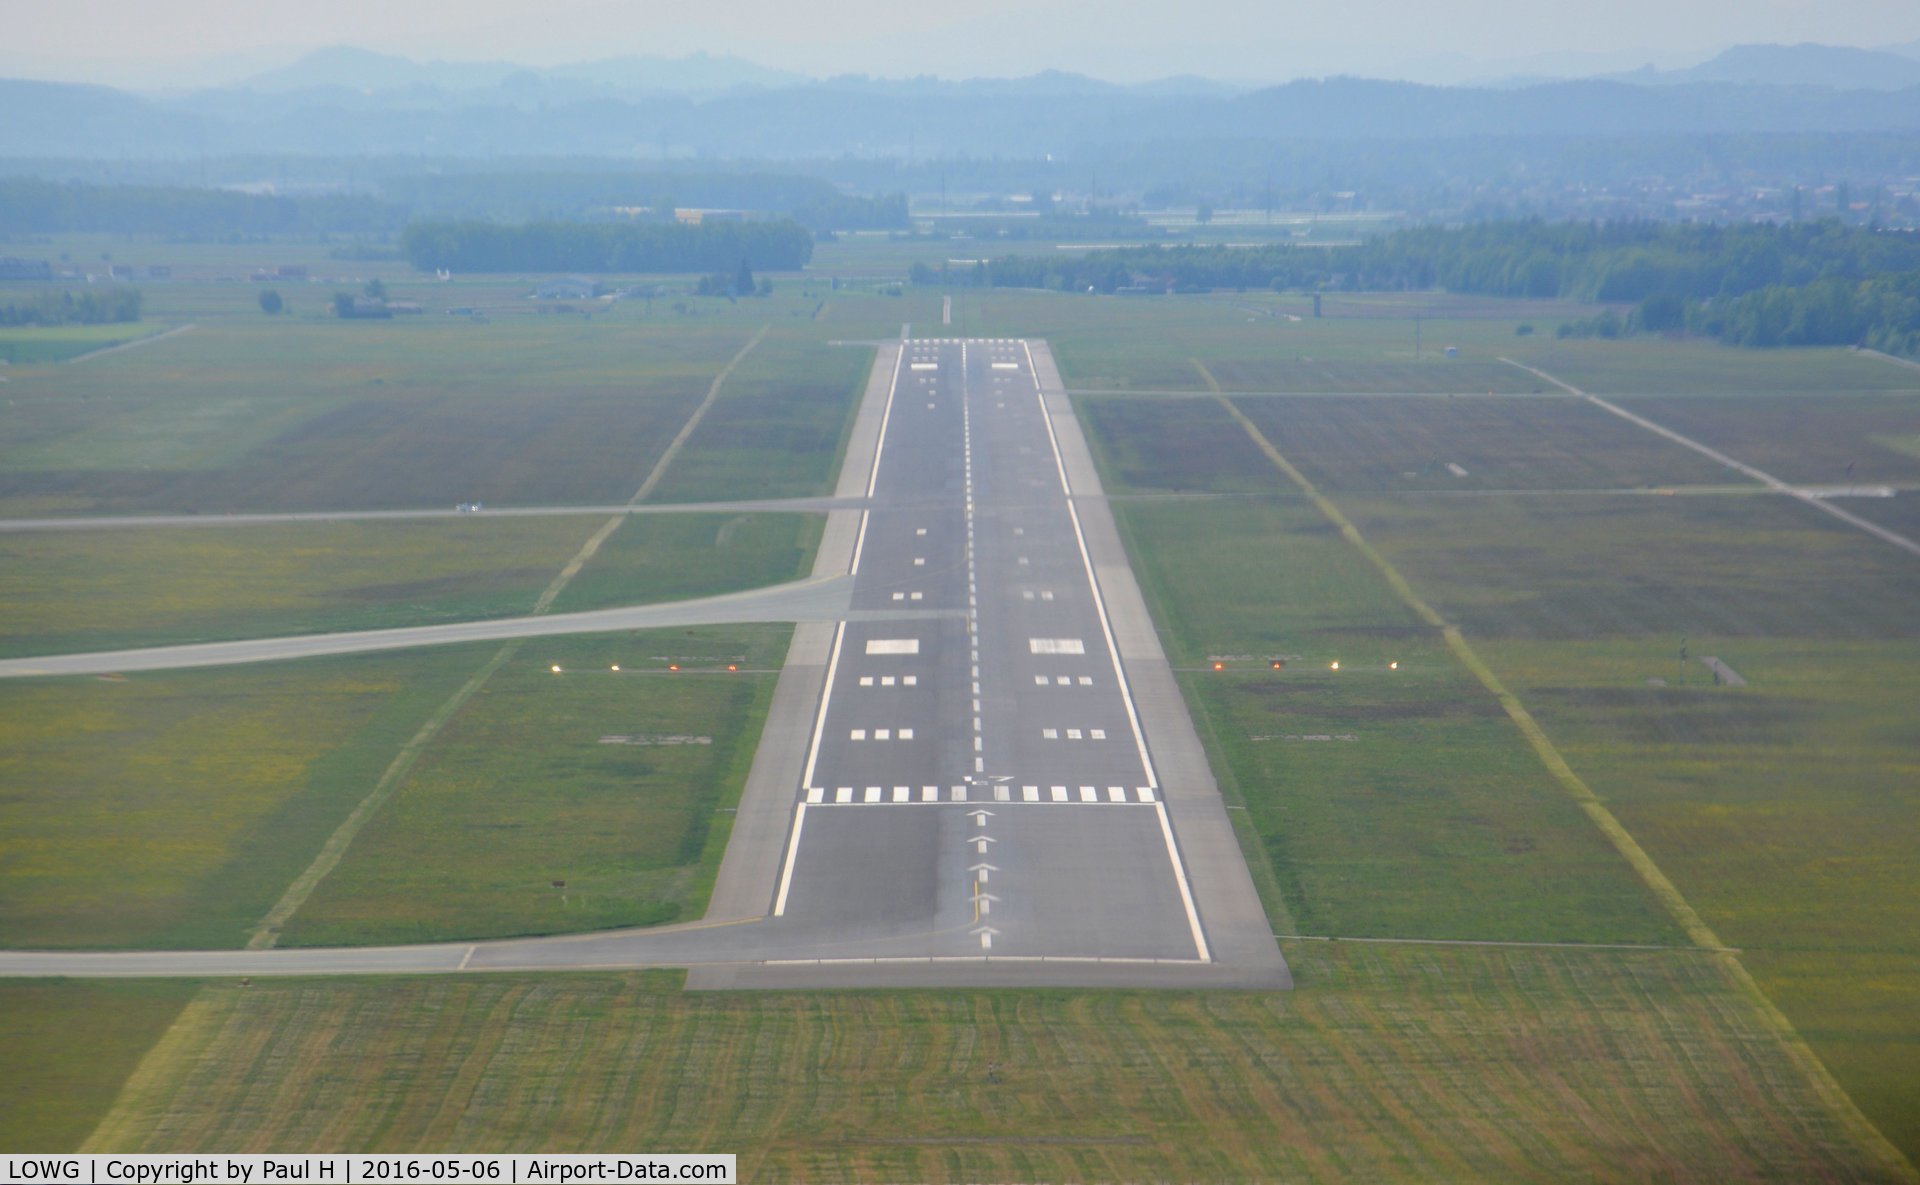 Graz Airport, Graz Austria (LOWG) - Rwy 17C at LOWG on a landing approach